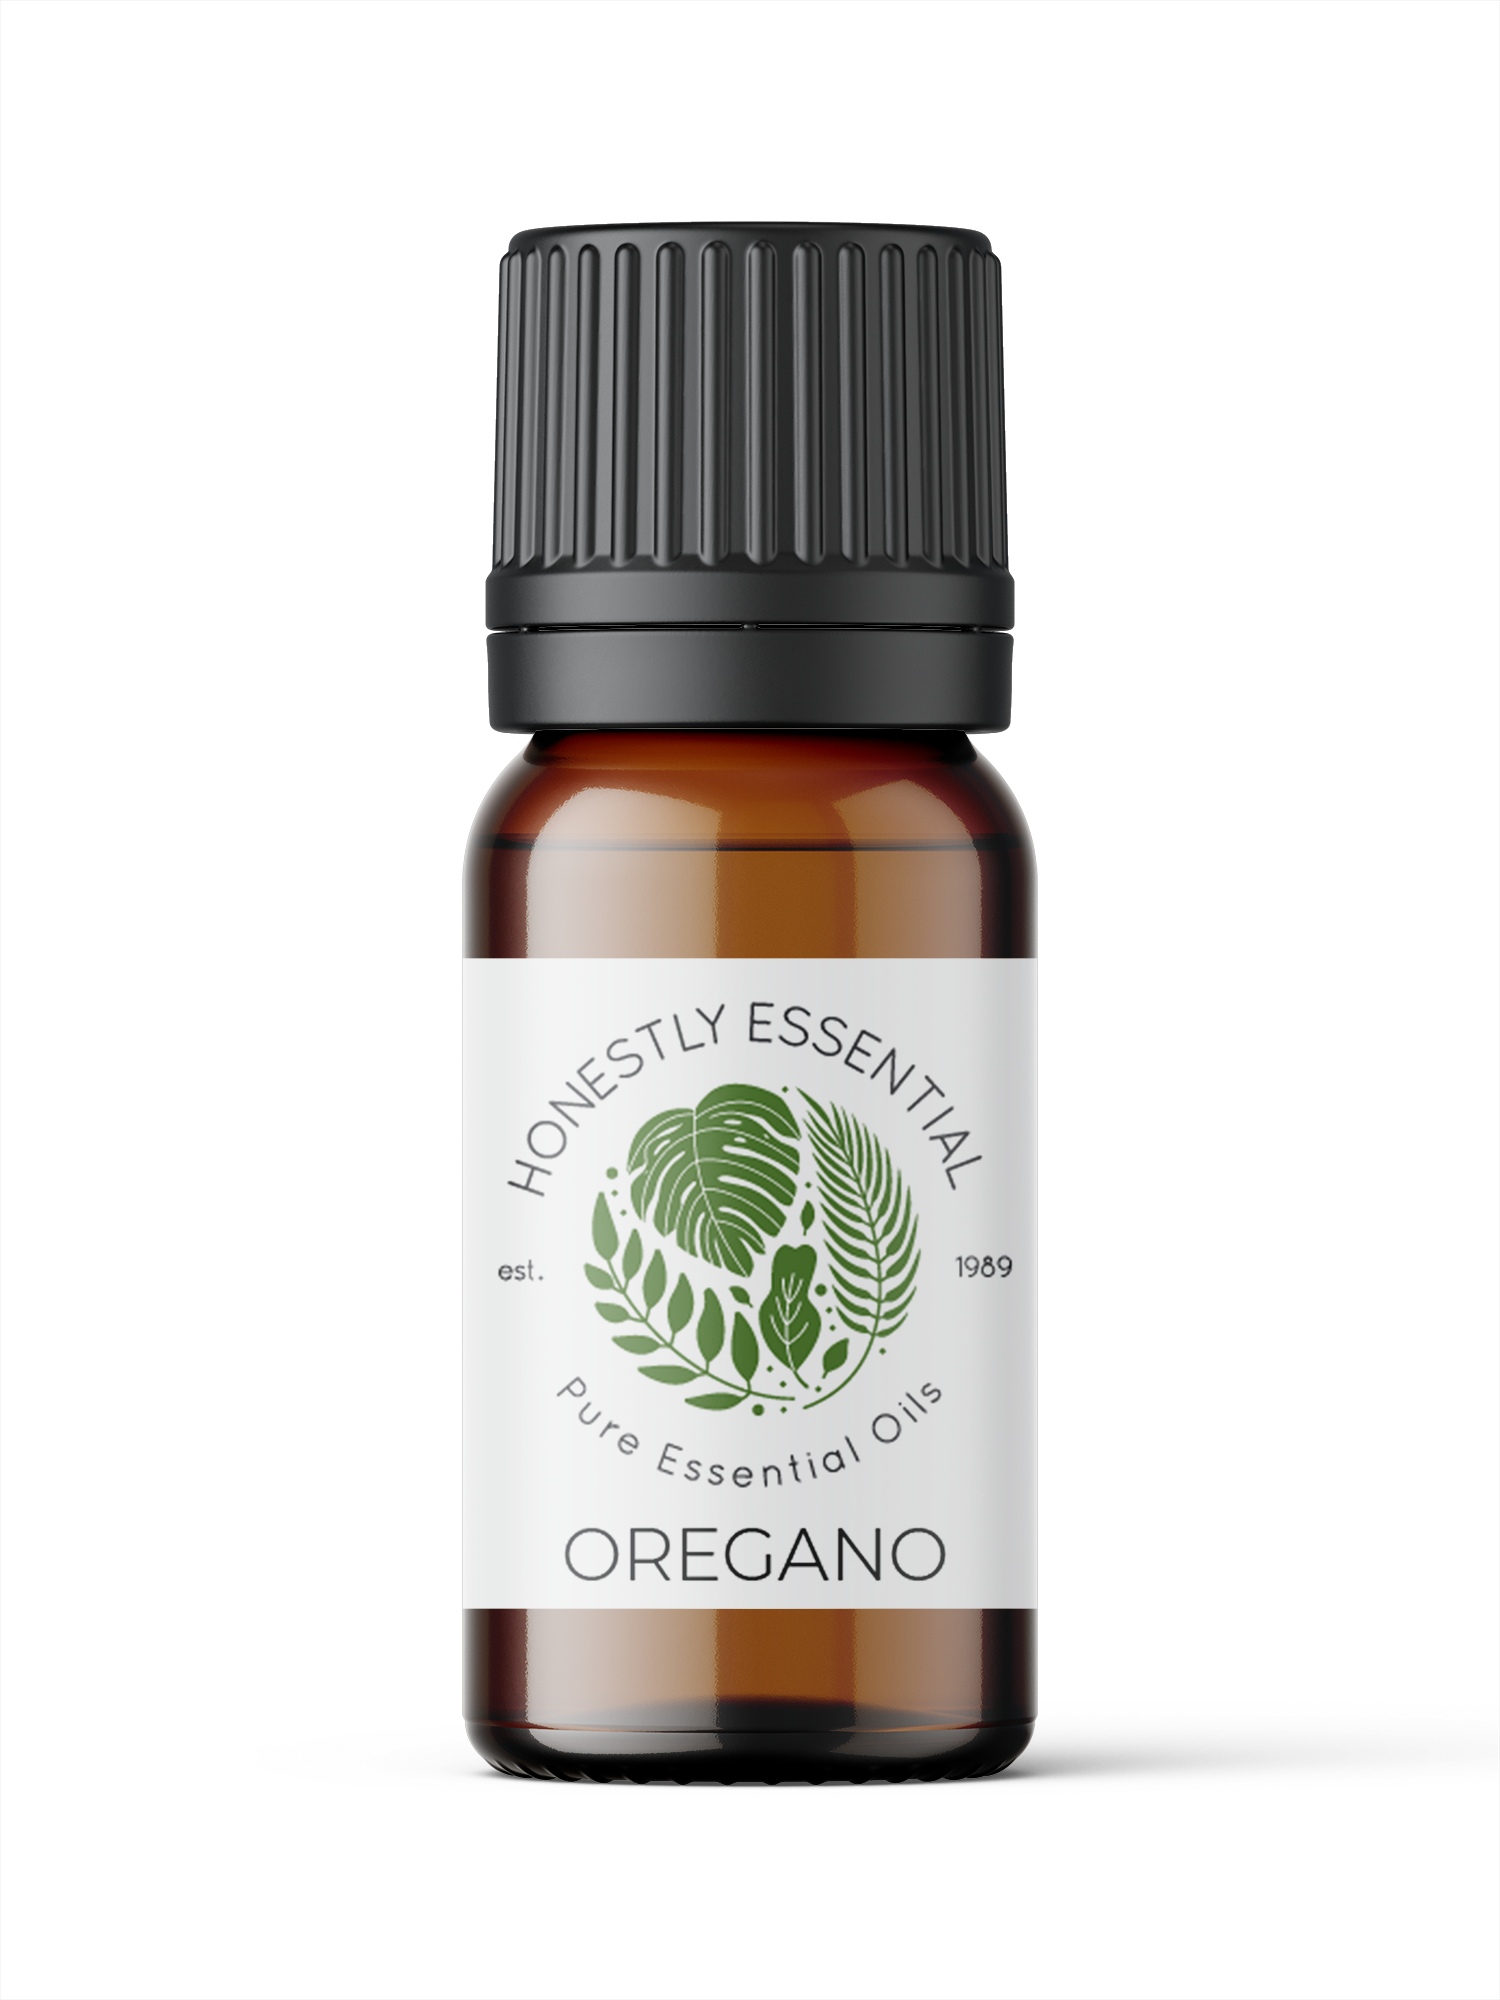 Oregano Essential Oil - Essential Oils | Honestly Essential Oils child, digestion, essential, herb, herb essential oil, herbs, immunity, kid, kid safe, oil, oregano, organic, safe